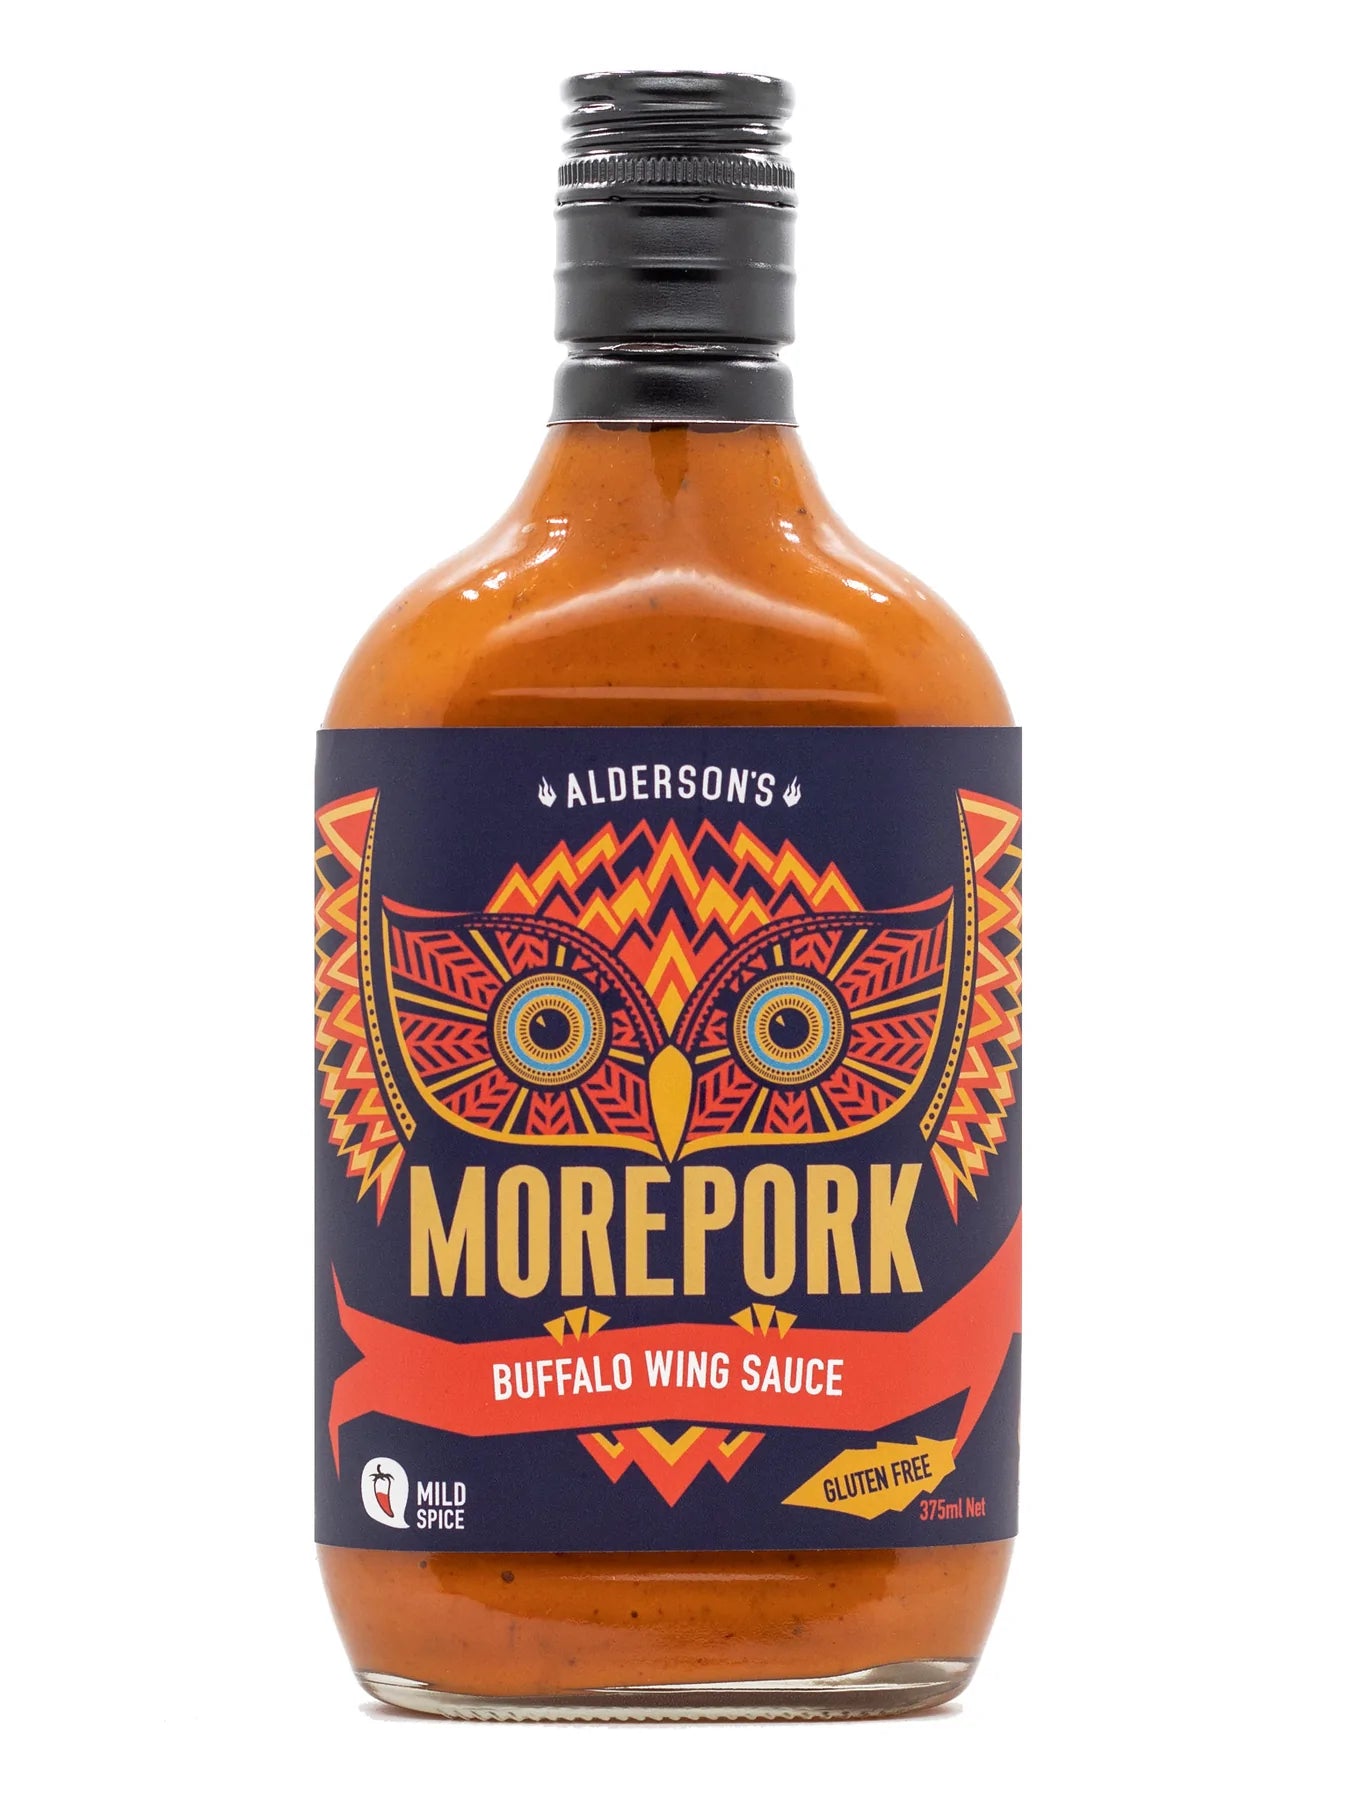 Alderson's Morepork Buffalo Wing Sauce